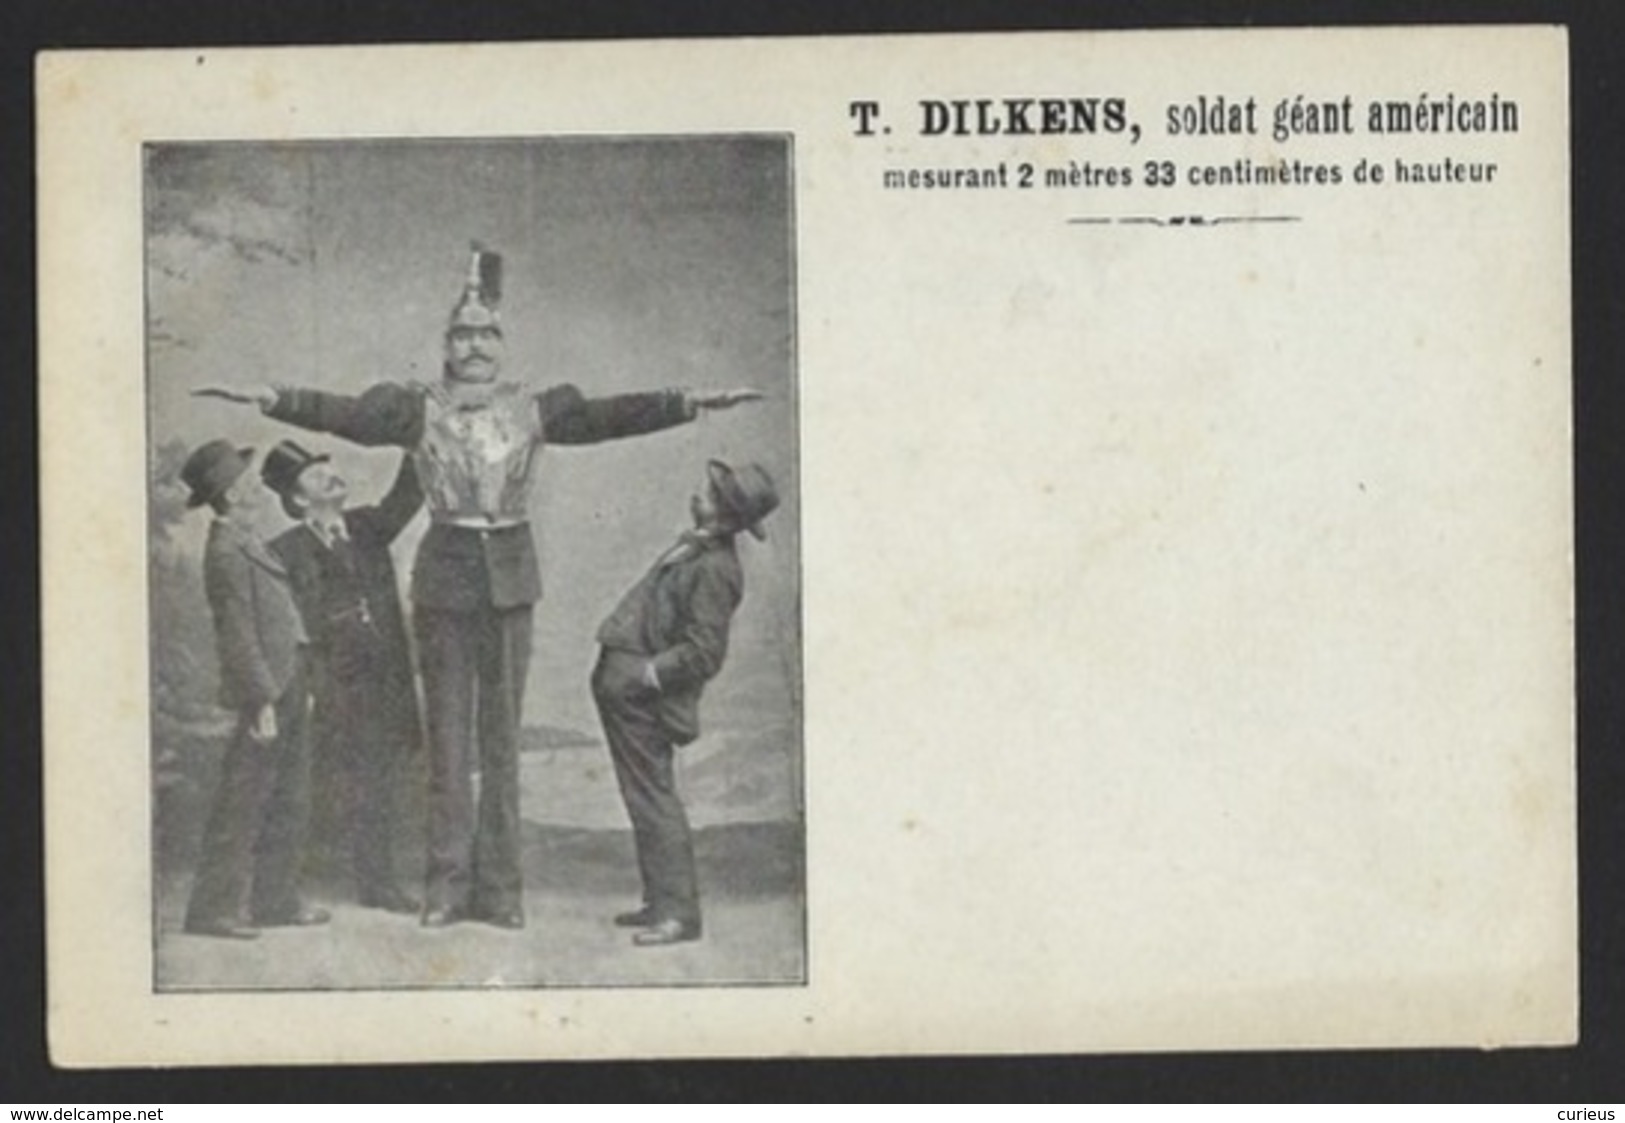 T. DILKENS * GEANT AMERICAN SOLDIER * MESURE 2,33 * REUS * SOLDAT GEANT AMERICAIN * FREAK SHOW * CIRCUS - Circus